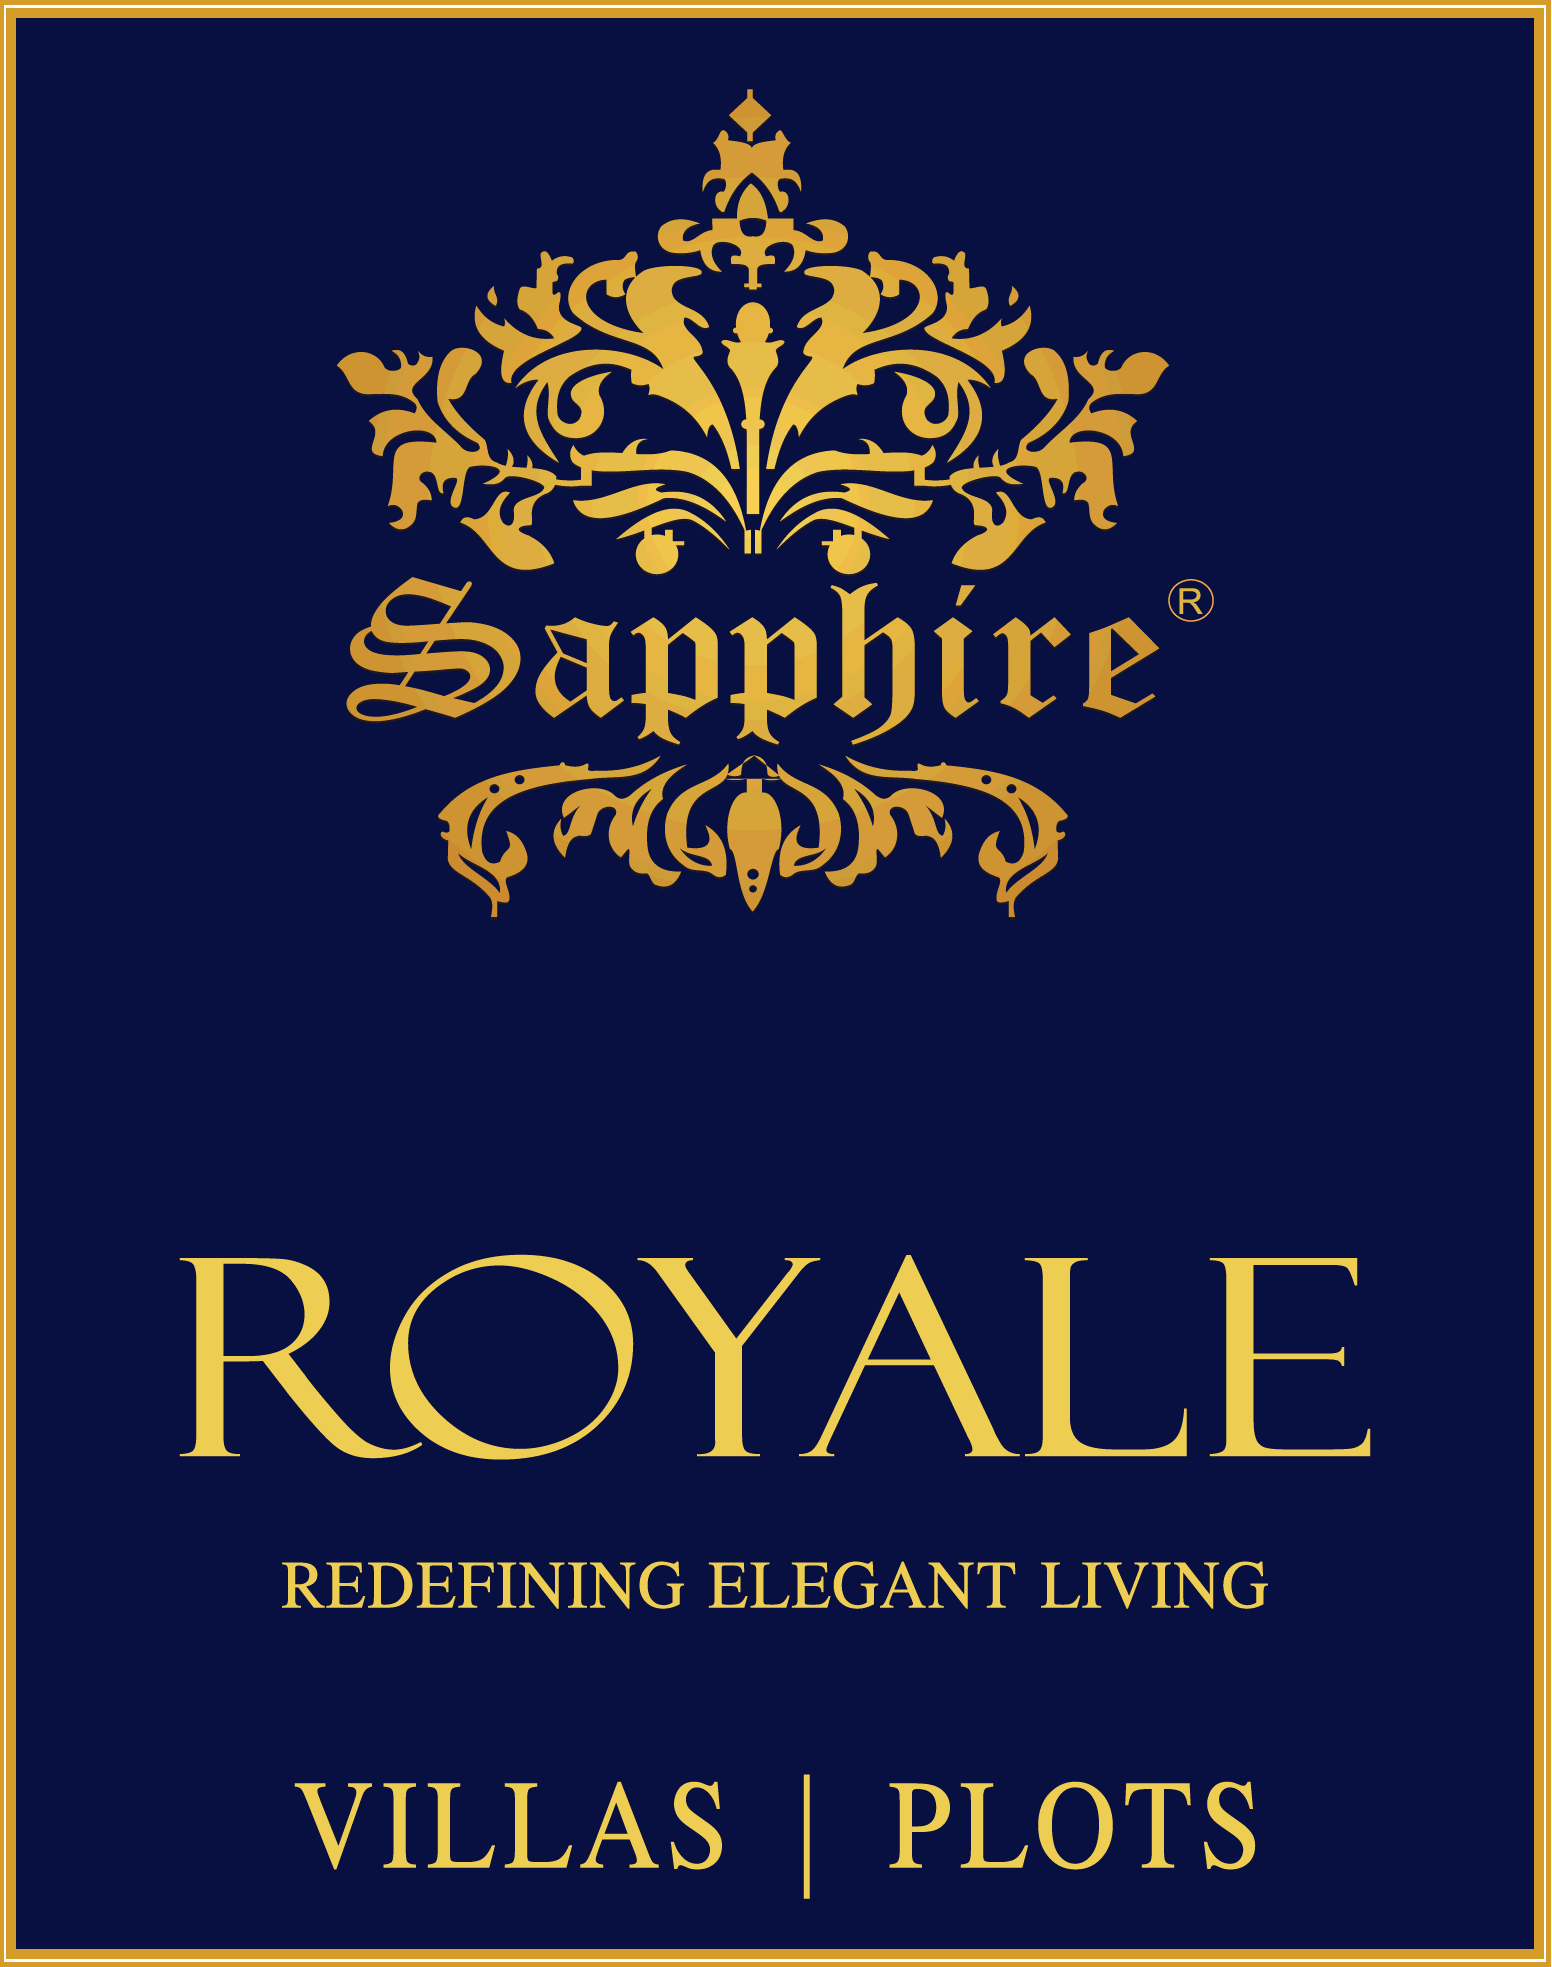 Sapphire Royale Redefining Elegant Living Villas & Plots in Lucknow